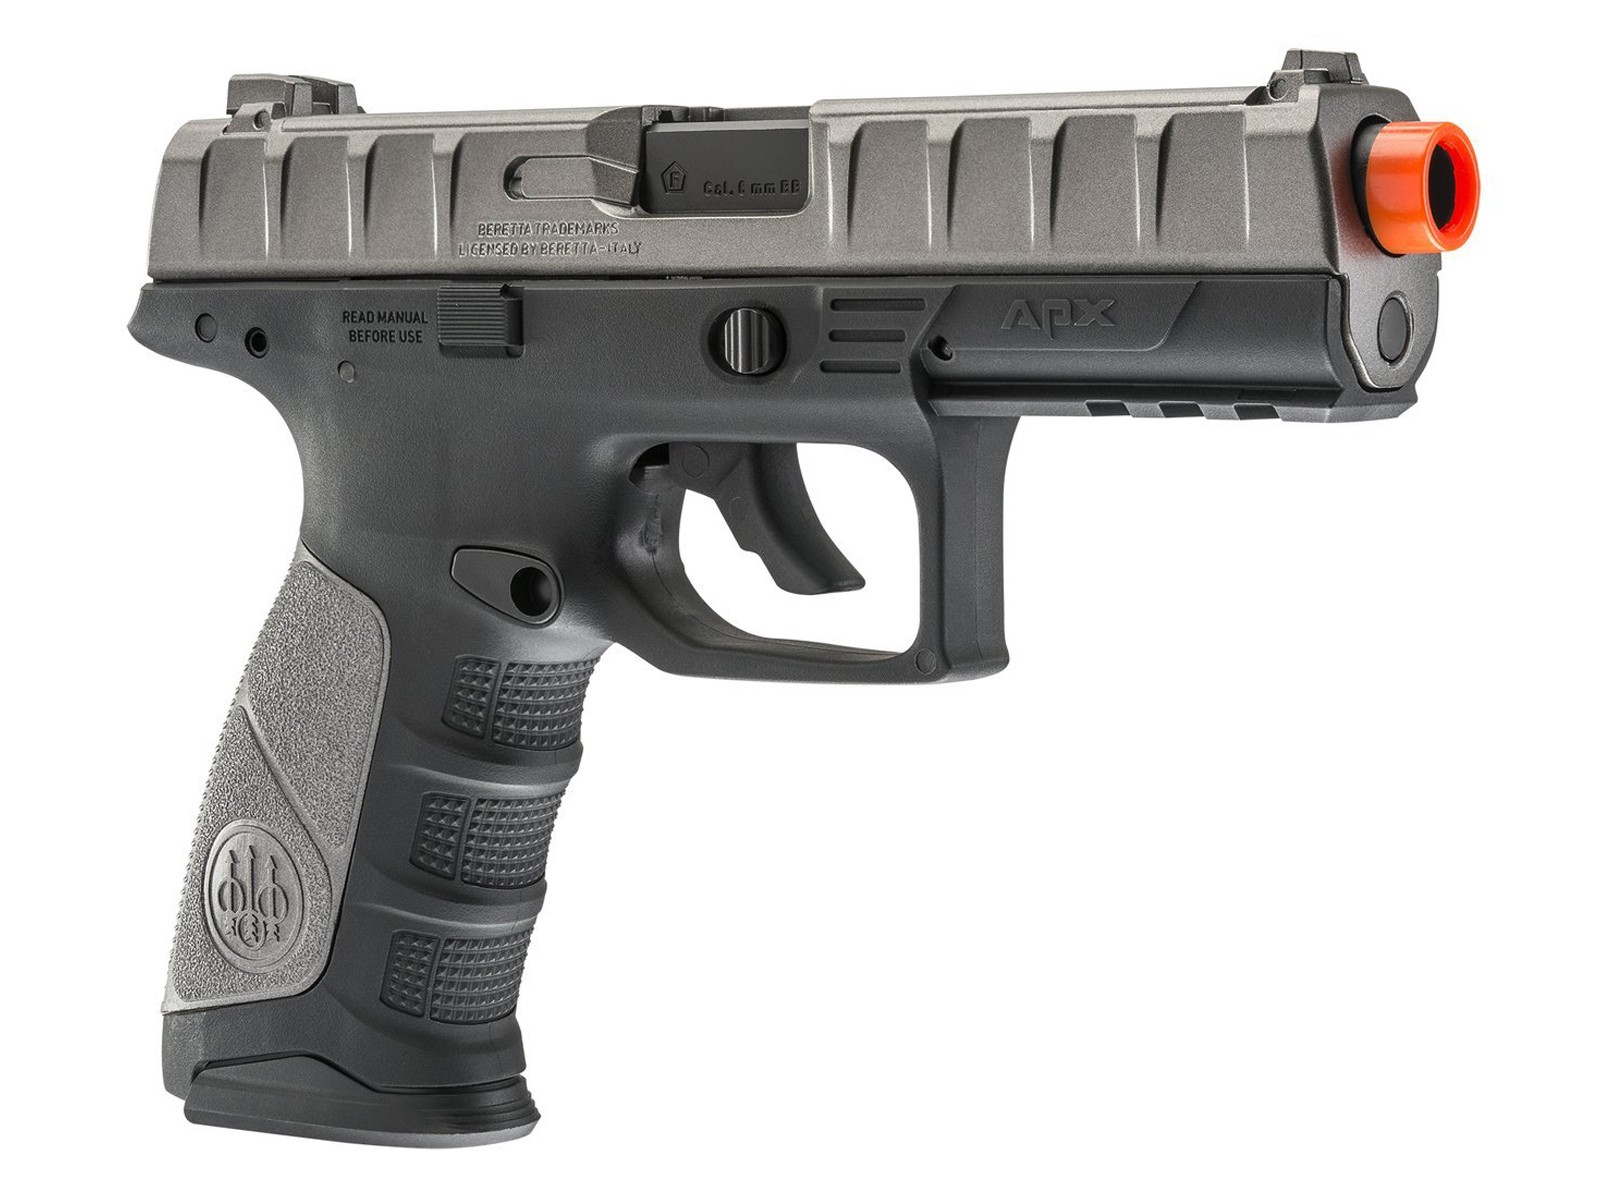 Beretta APX CO2 Metal Slide Airsoft Pistol, Black/Silver 6mm